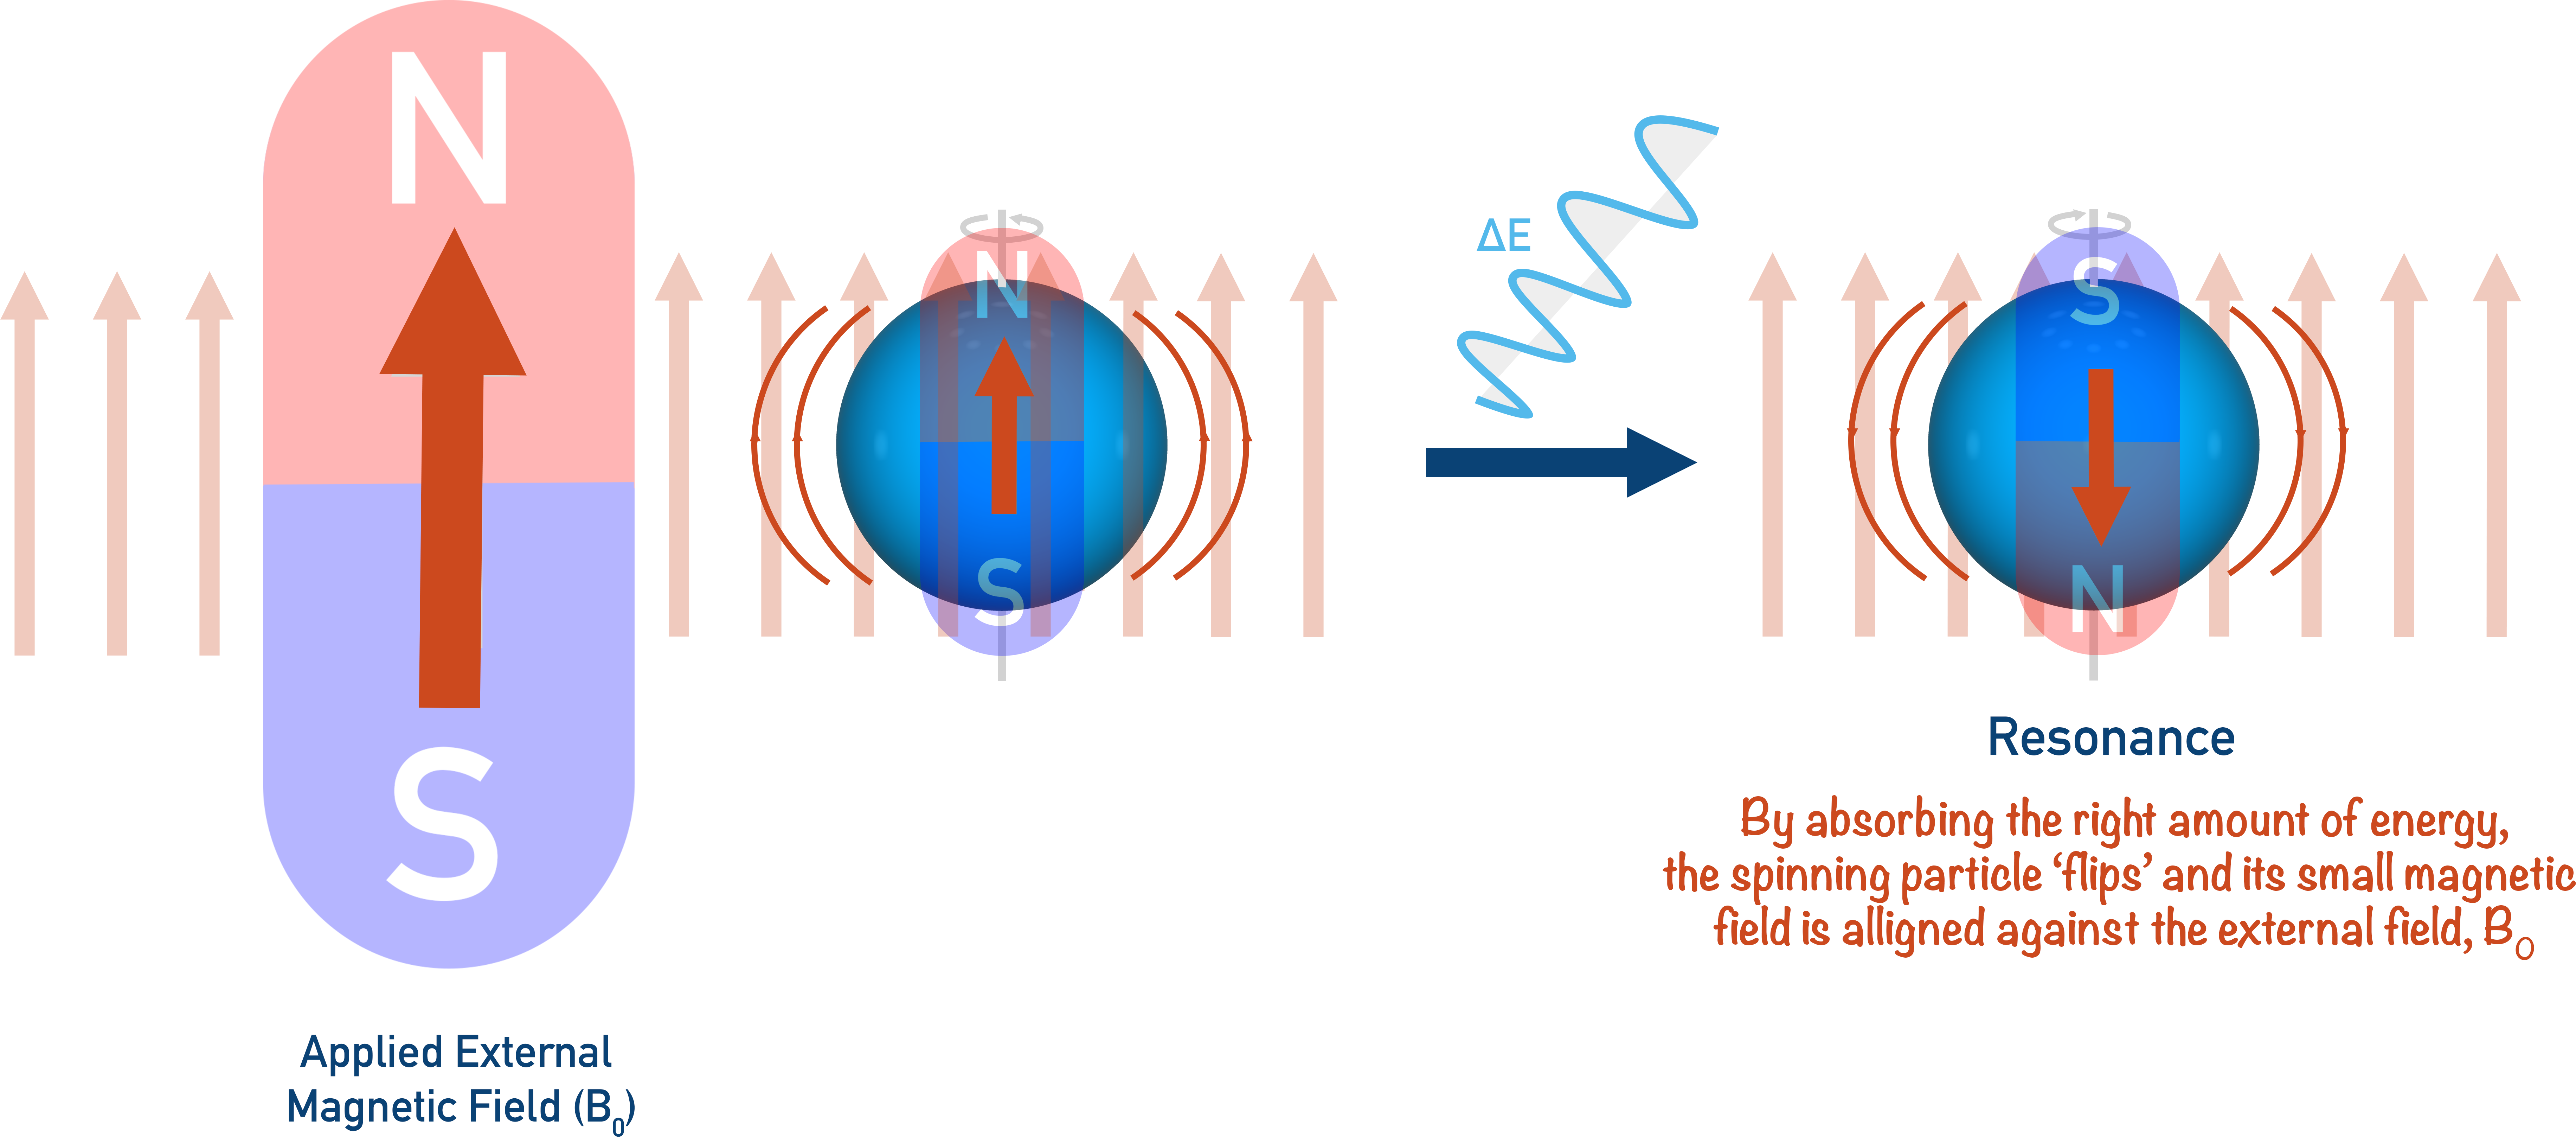 NMR spectroscopy resonance with external field